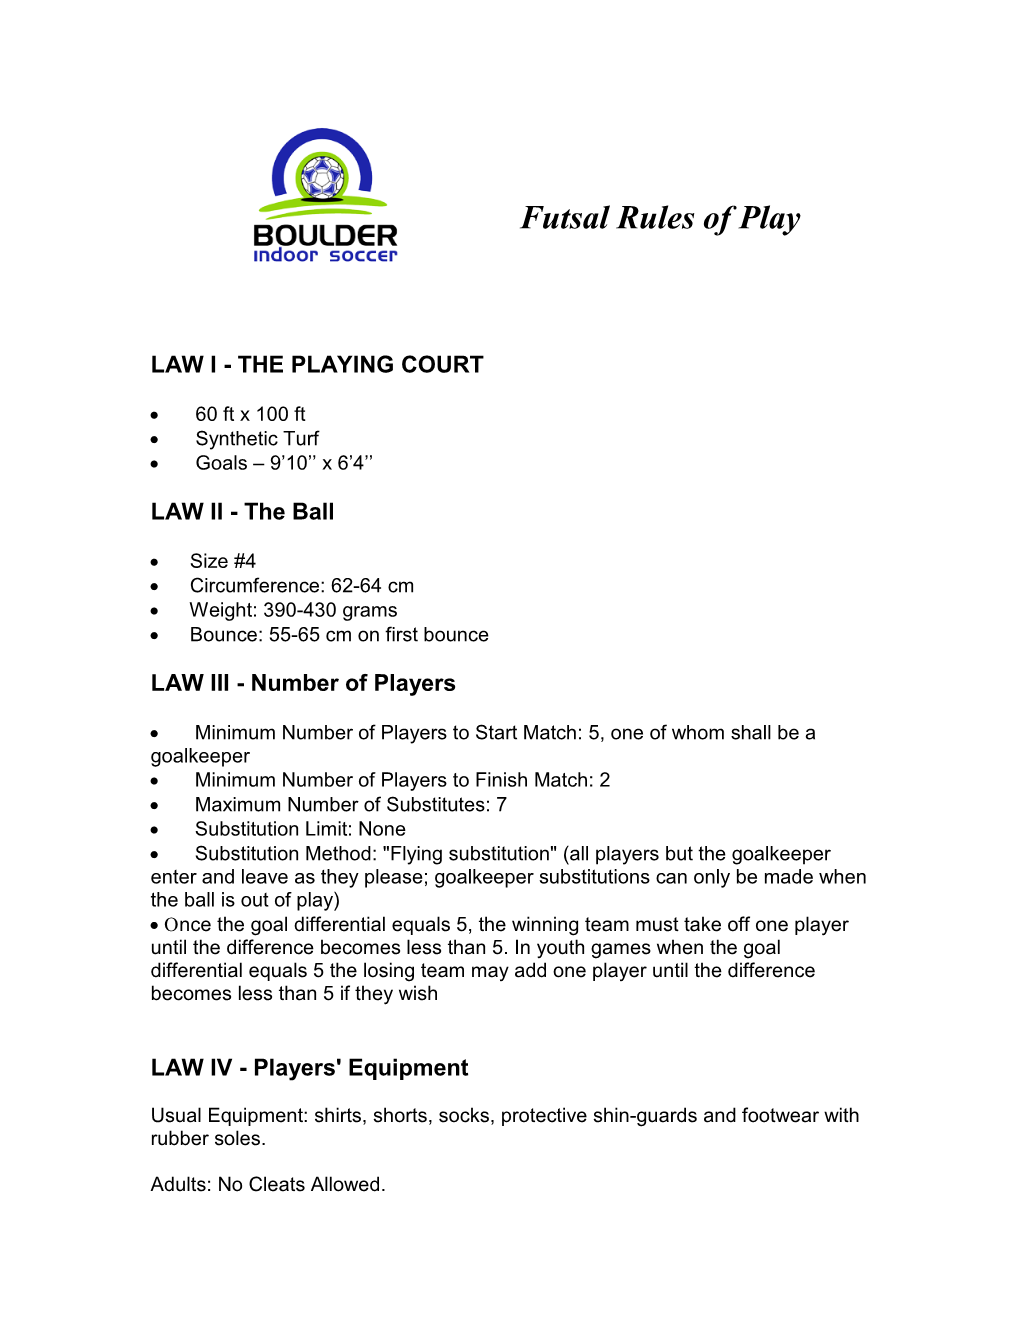 Boulder Indoor Futsal Rules of Play